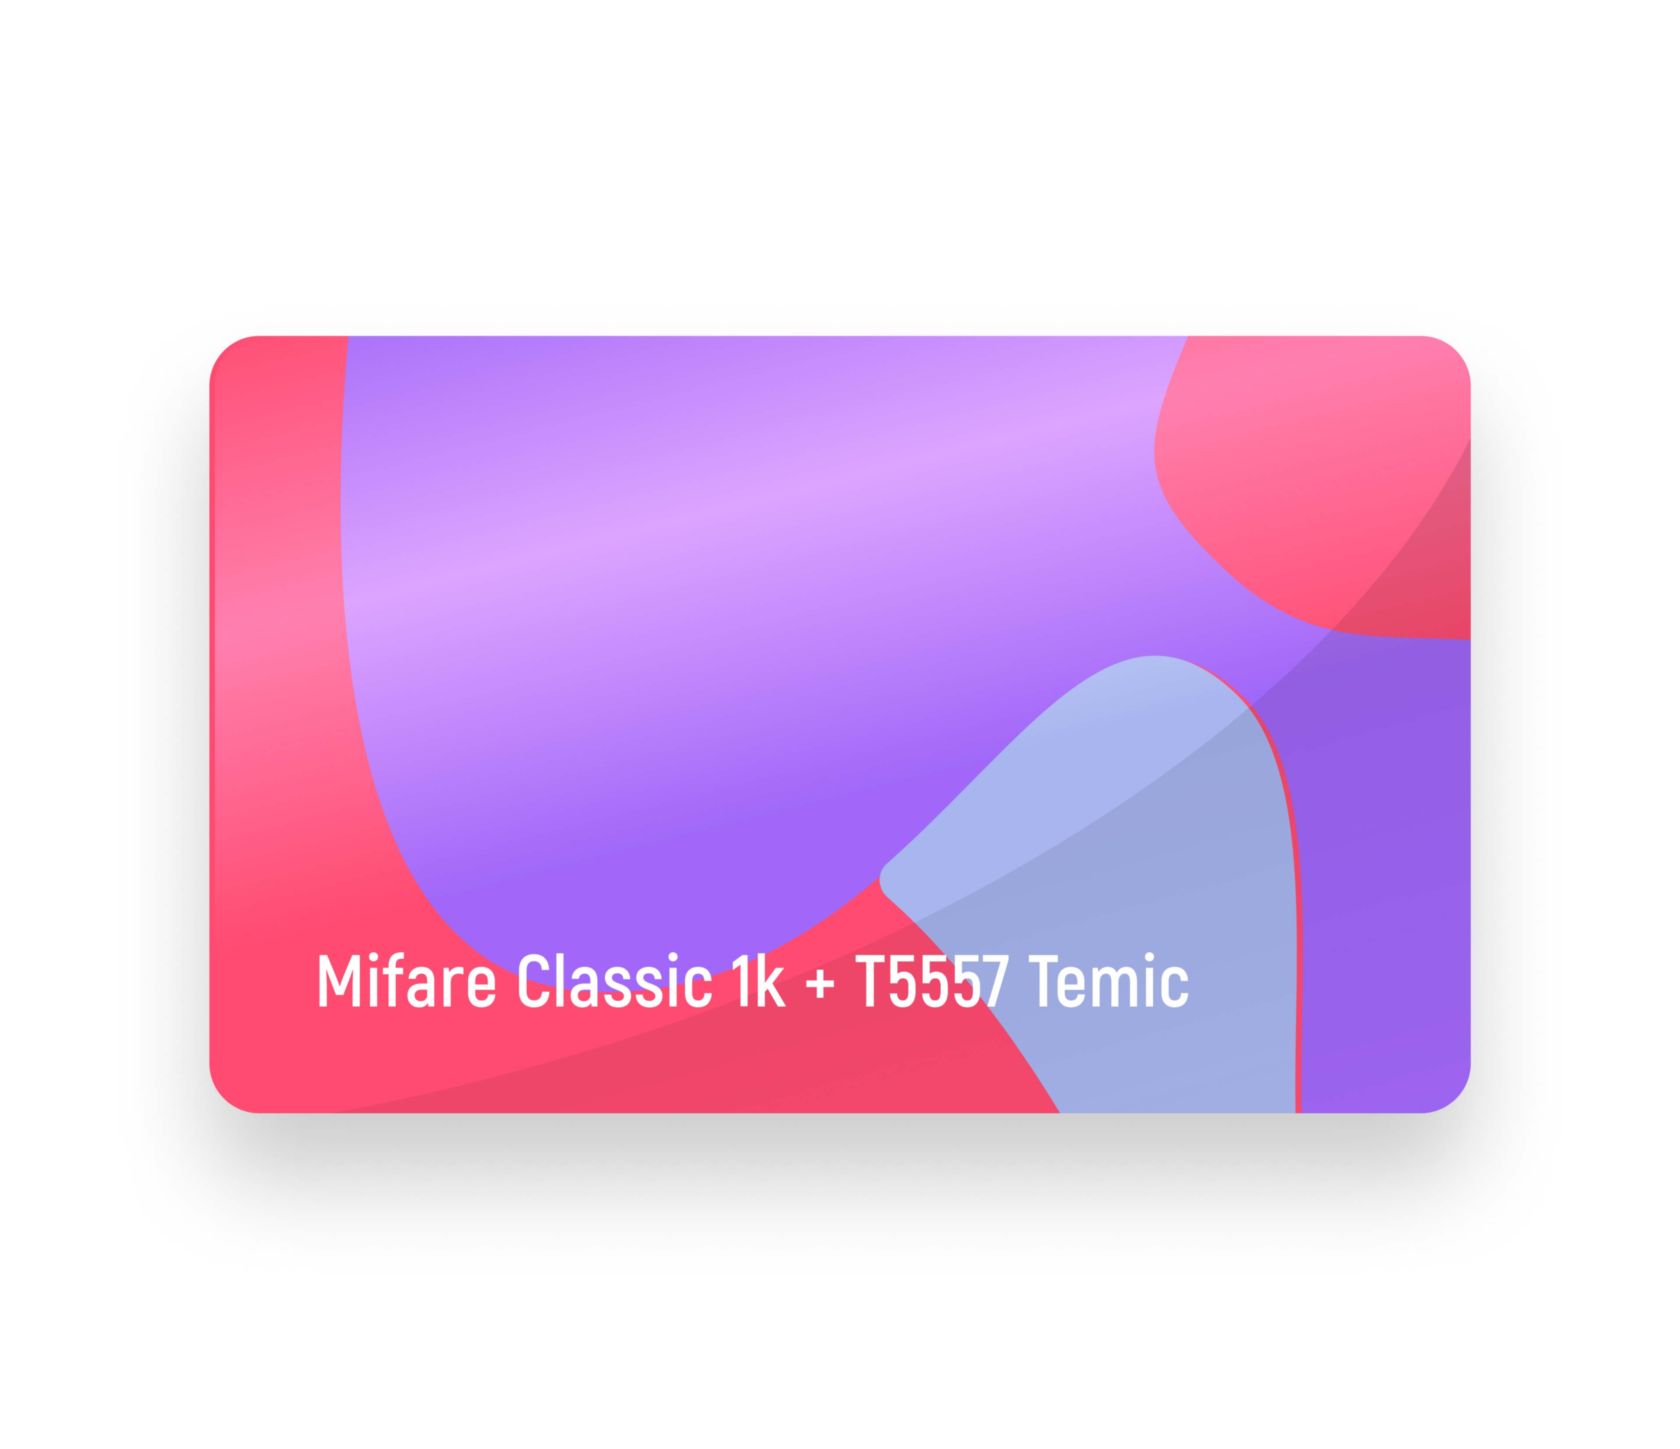 Mifare Classic 1k + T5557 Temic